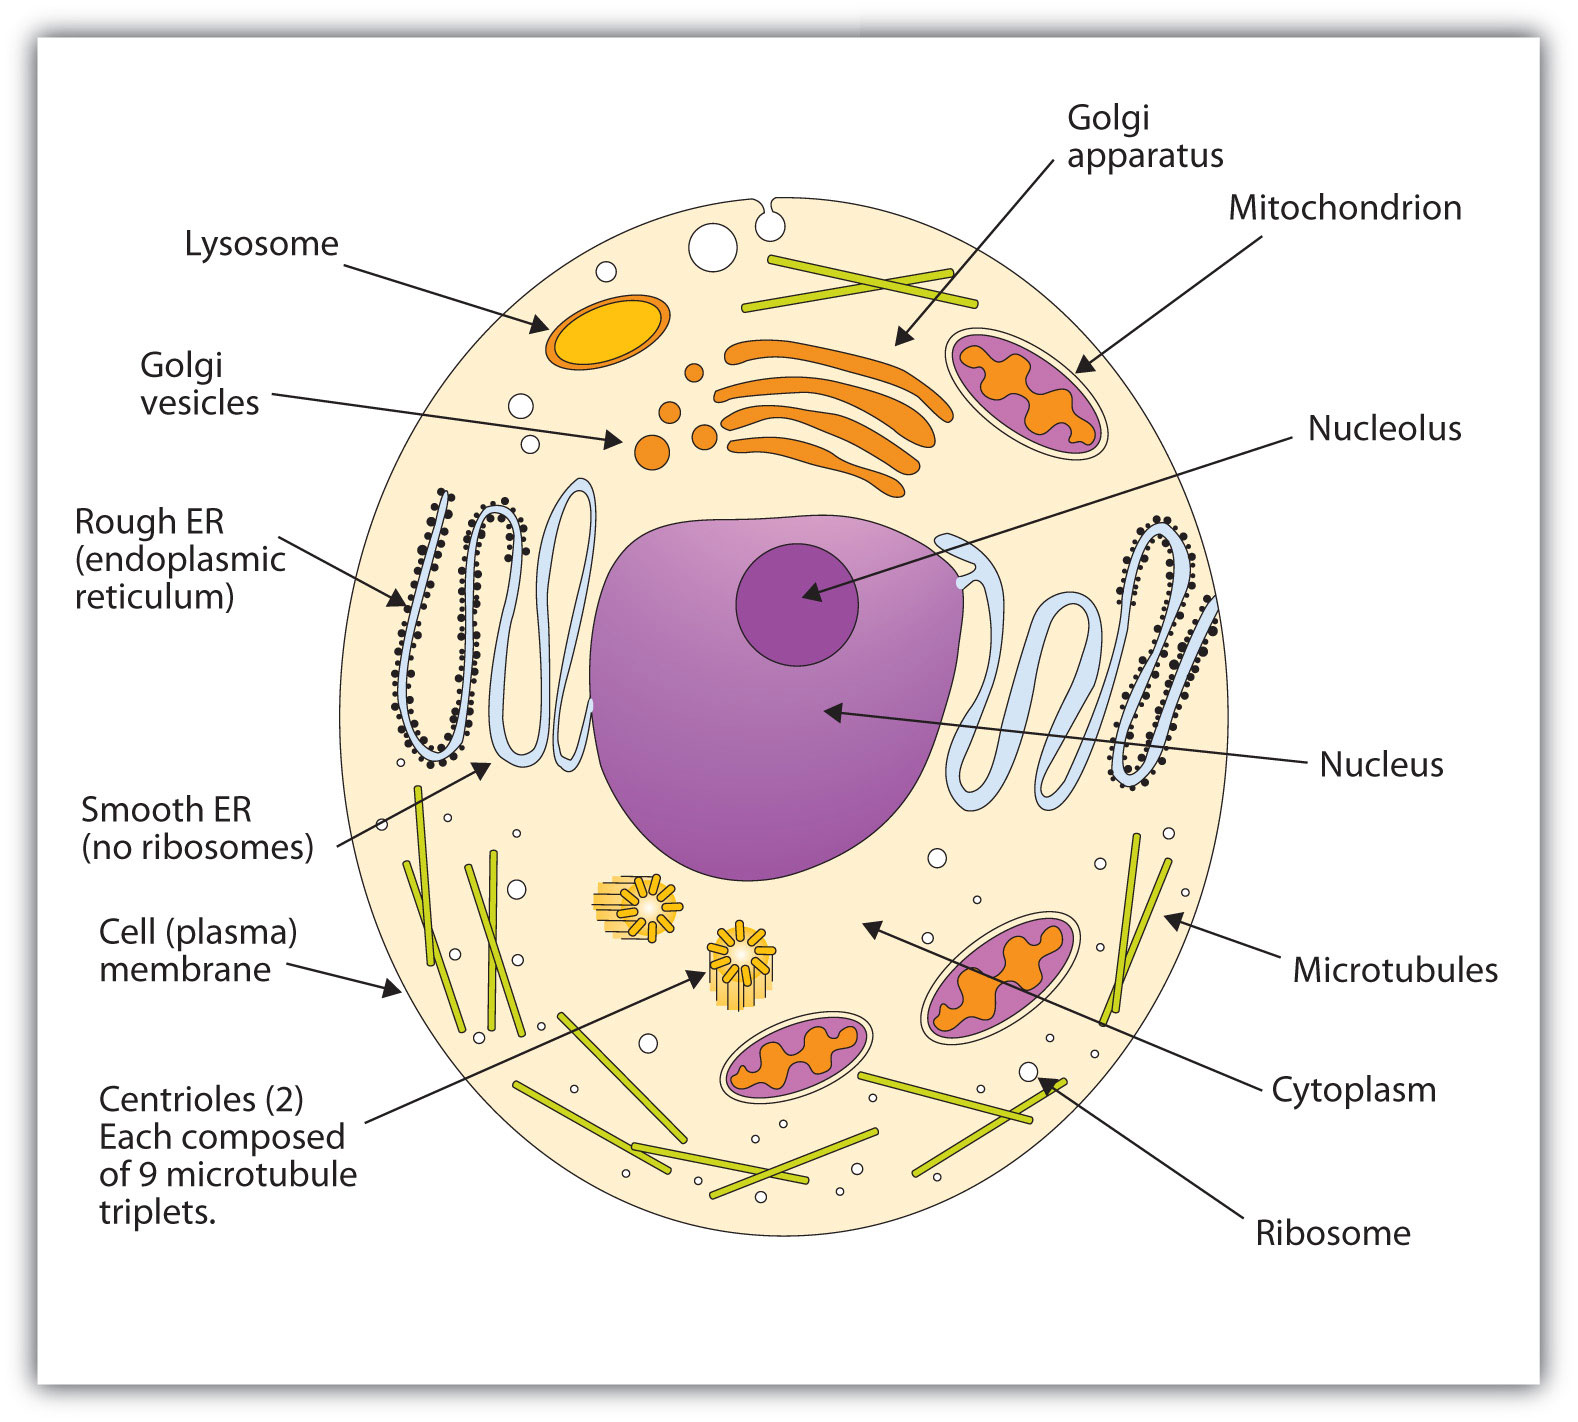 Both Cells - Biorganelles